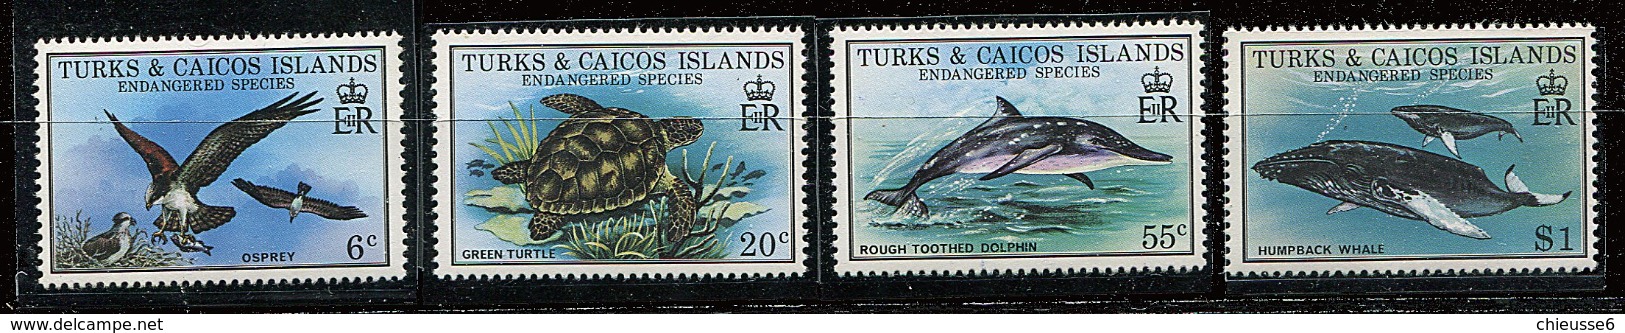 Turks Et Caiques ** N° 431 à 435 - Orfraie, Tortue, Conque, Dauphin, Baleins - Turks E Caicos